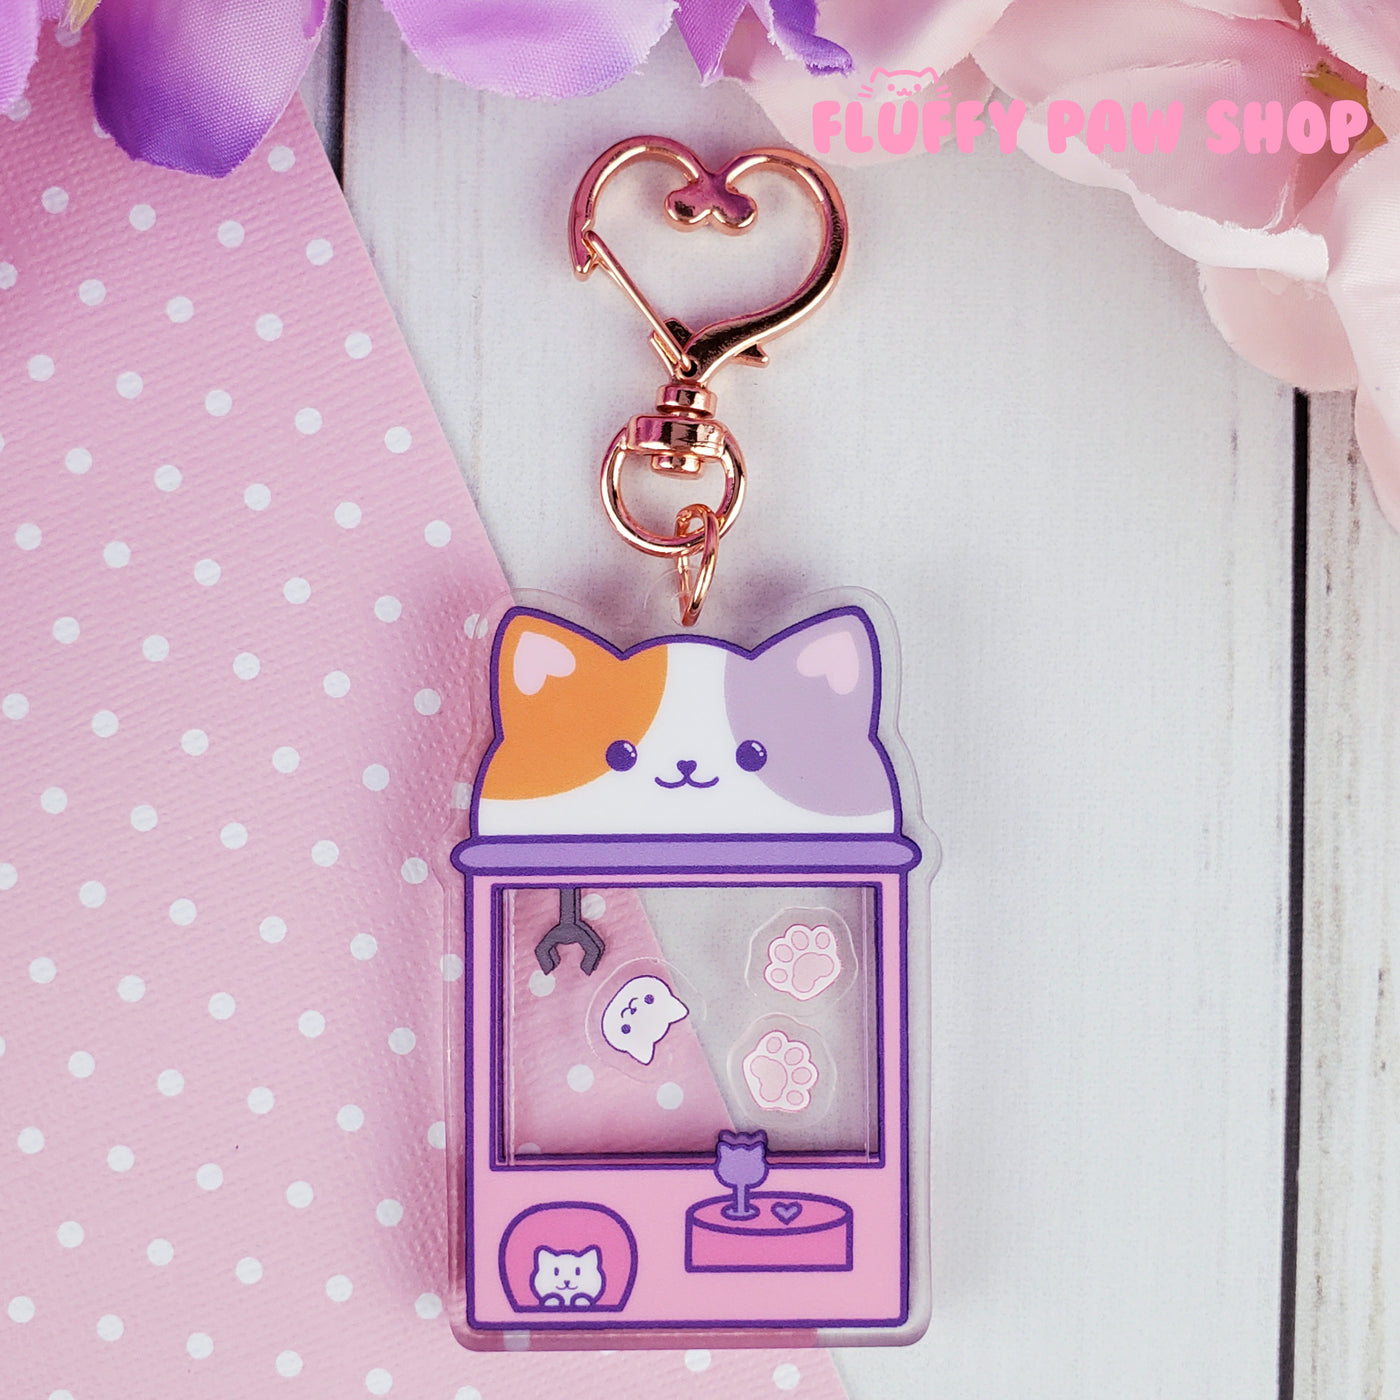 Kitty Acrylic Keychain Bundle - Fluffy Paw Shop - Petplay BDSM DDLG Kitten Play Tail Cosplay Furry